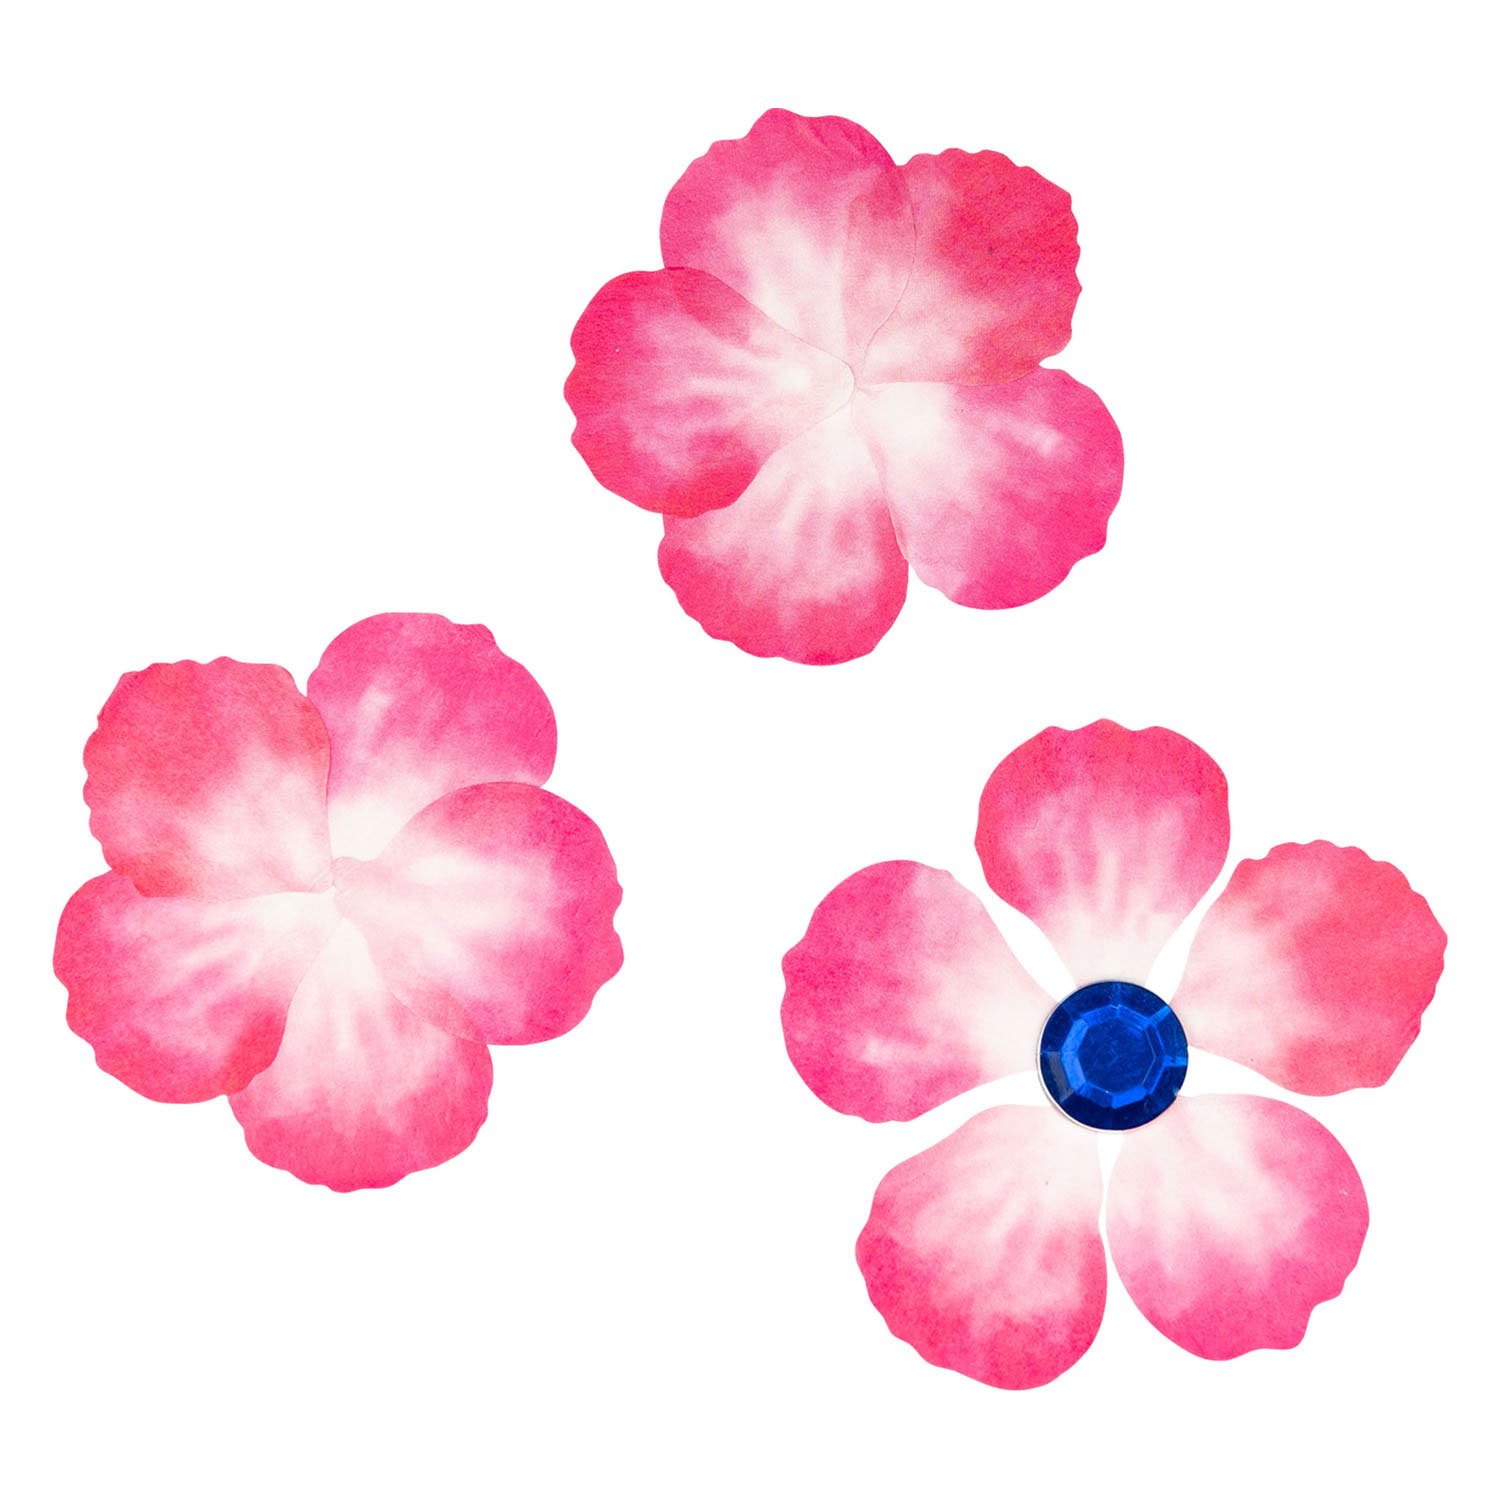 Colorations - Autocollants Washi - Pétales Roses, 80pcs.